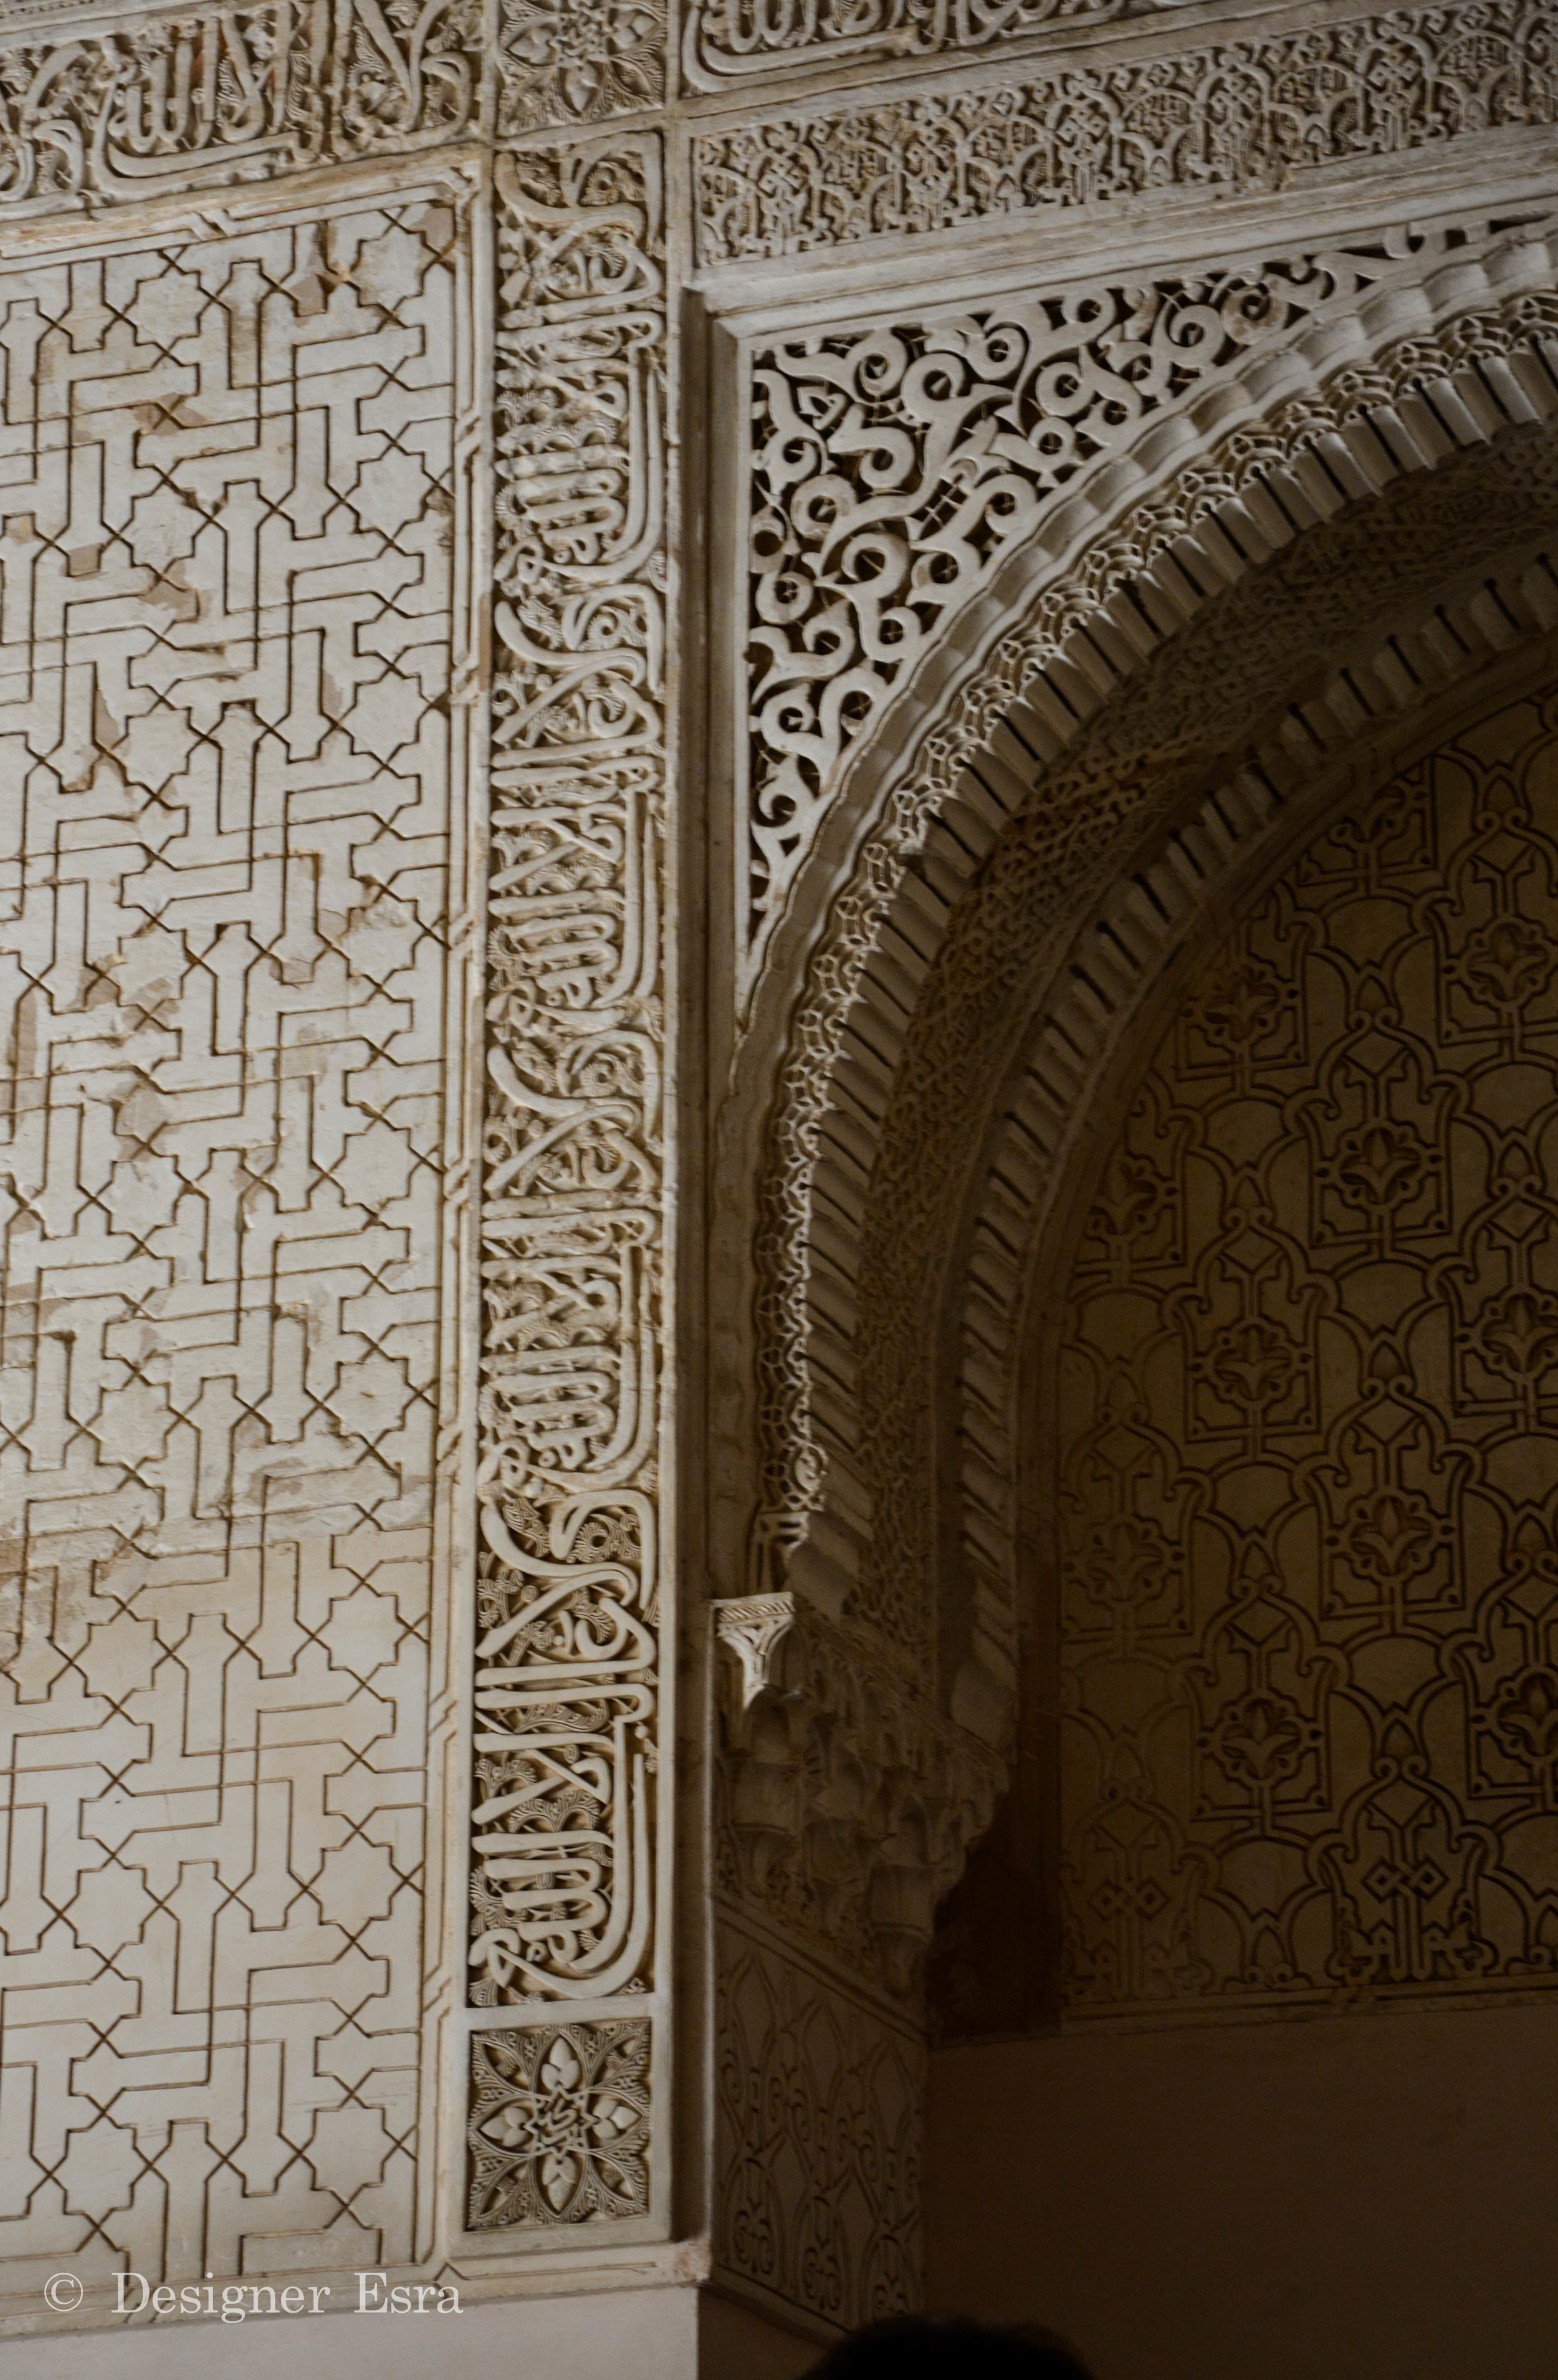 Islamic Geometric Patterns in Spain